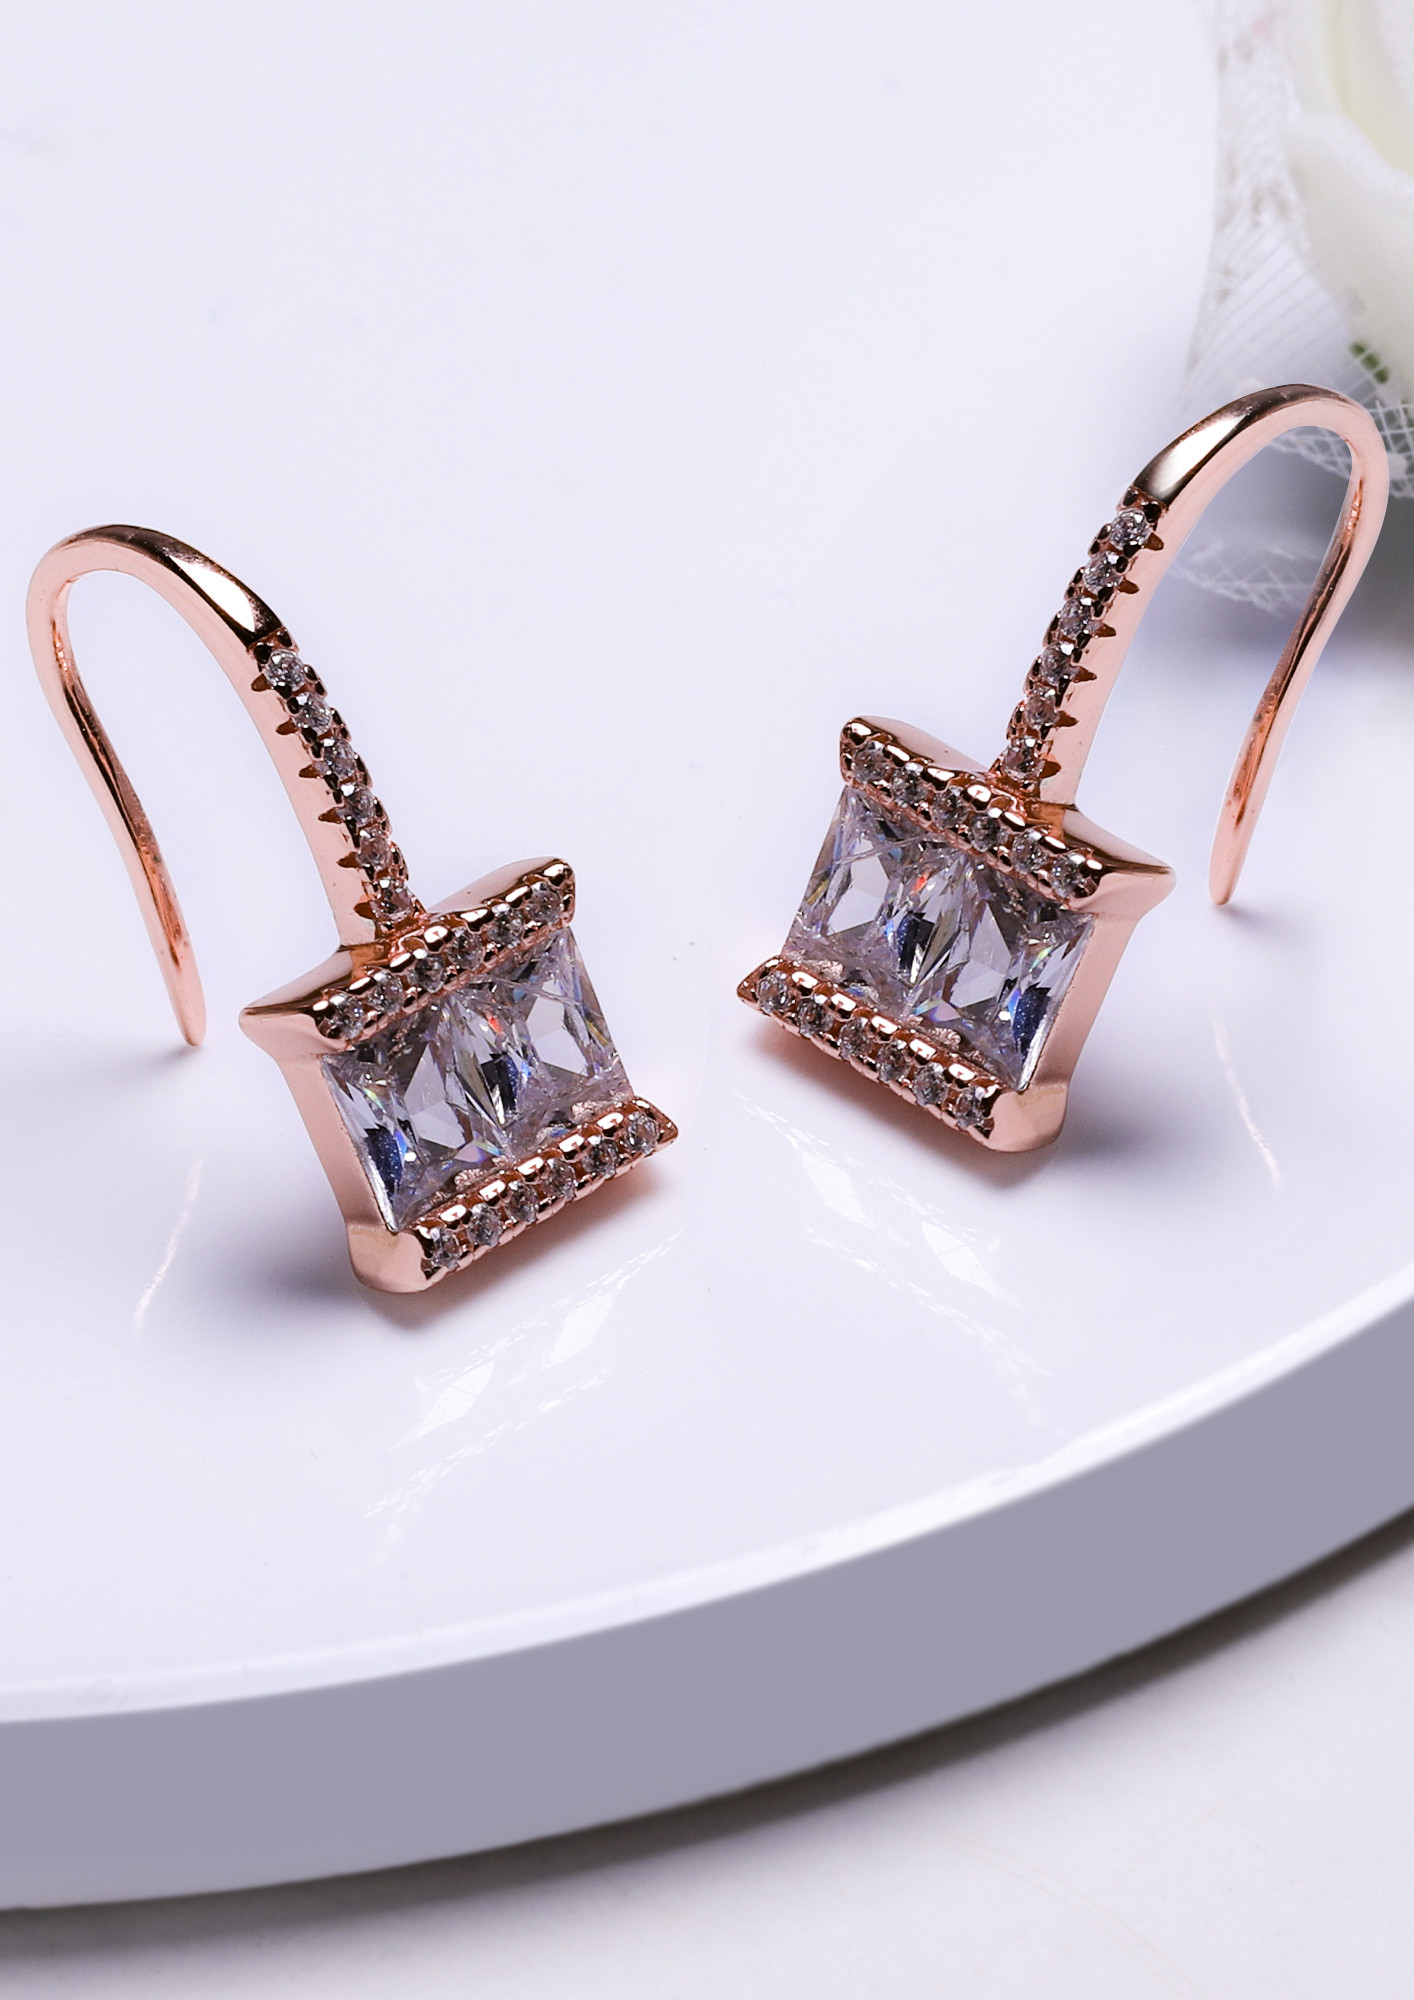 Buy Multicolored Earrings for Women by Crunchy Fashion Online | Ajio.com